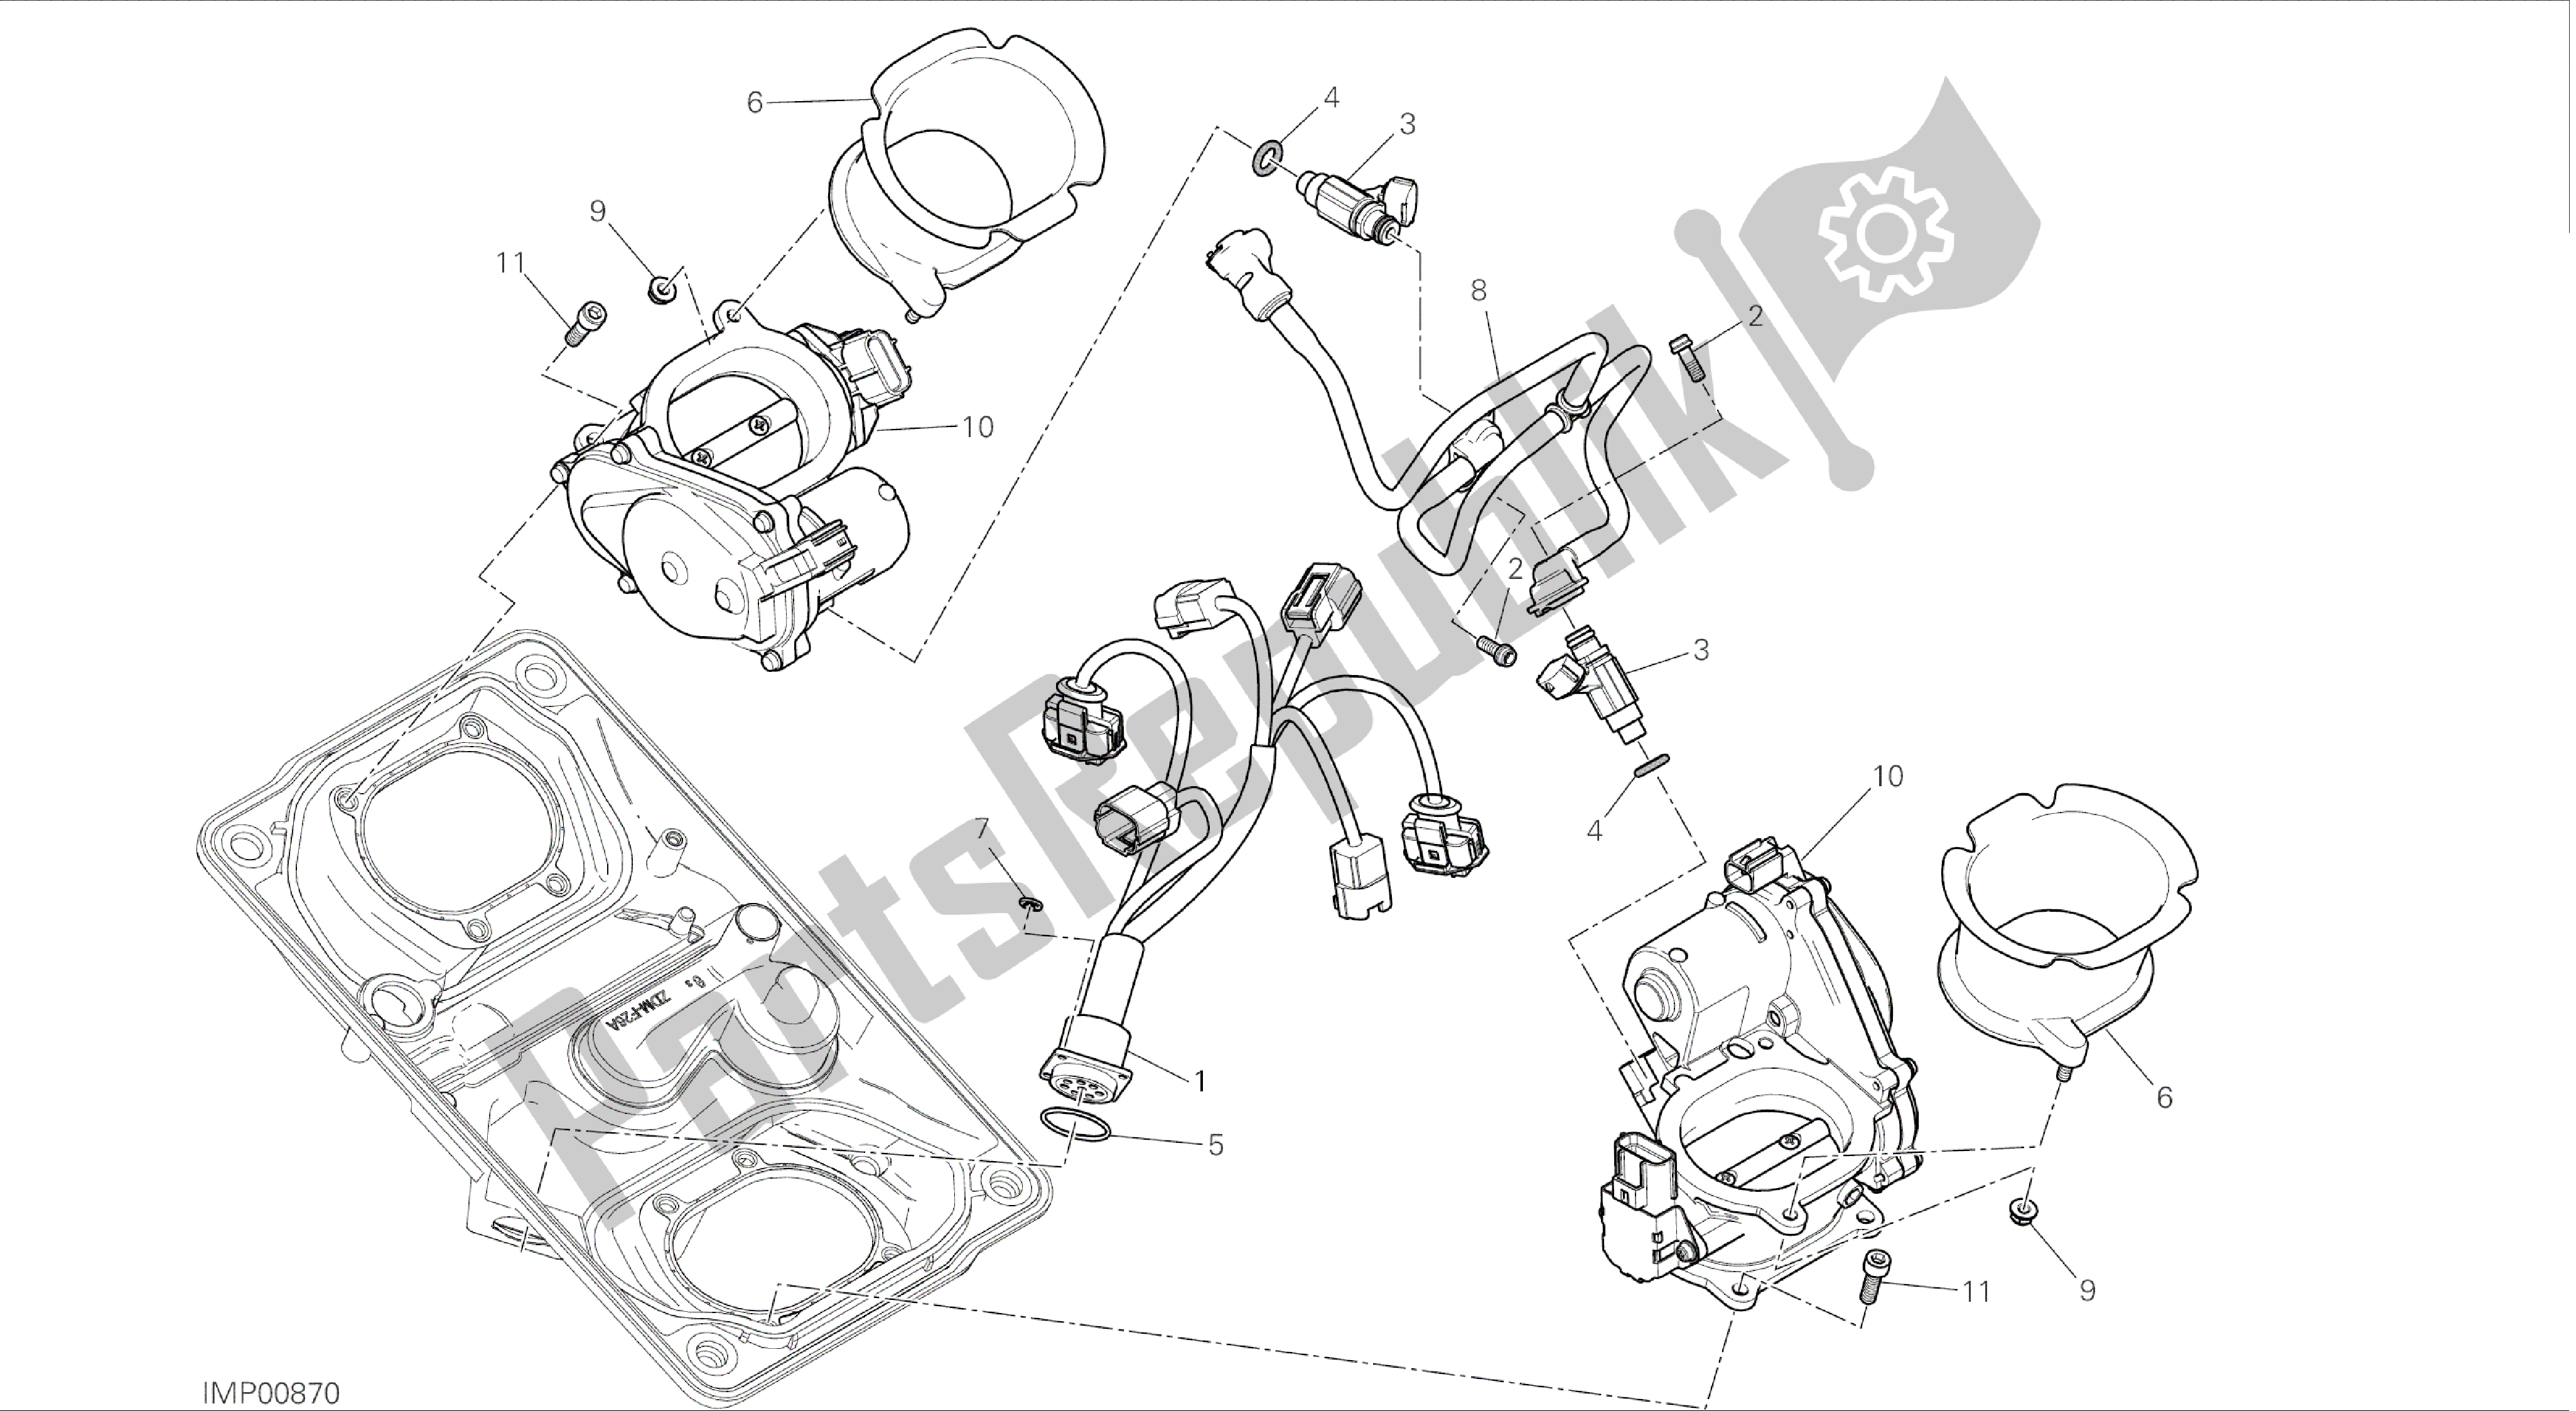 Todas las partes para Dibujo 017 - Cuerpo Del Acelerador [mod: 899 Abs; Xst: Marco De Grupo Aus, Eur, Fra, Jap, Twn] de Ducati Panigale 899 2014